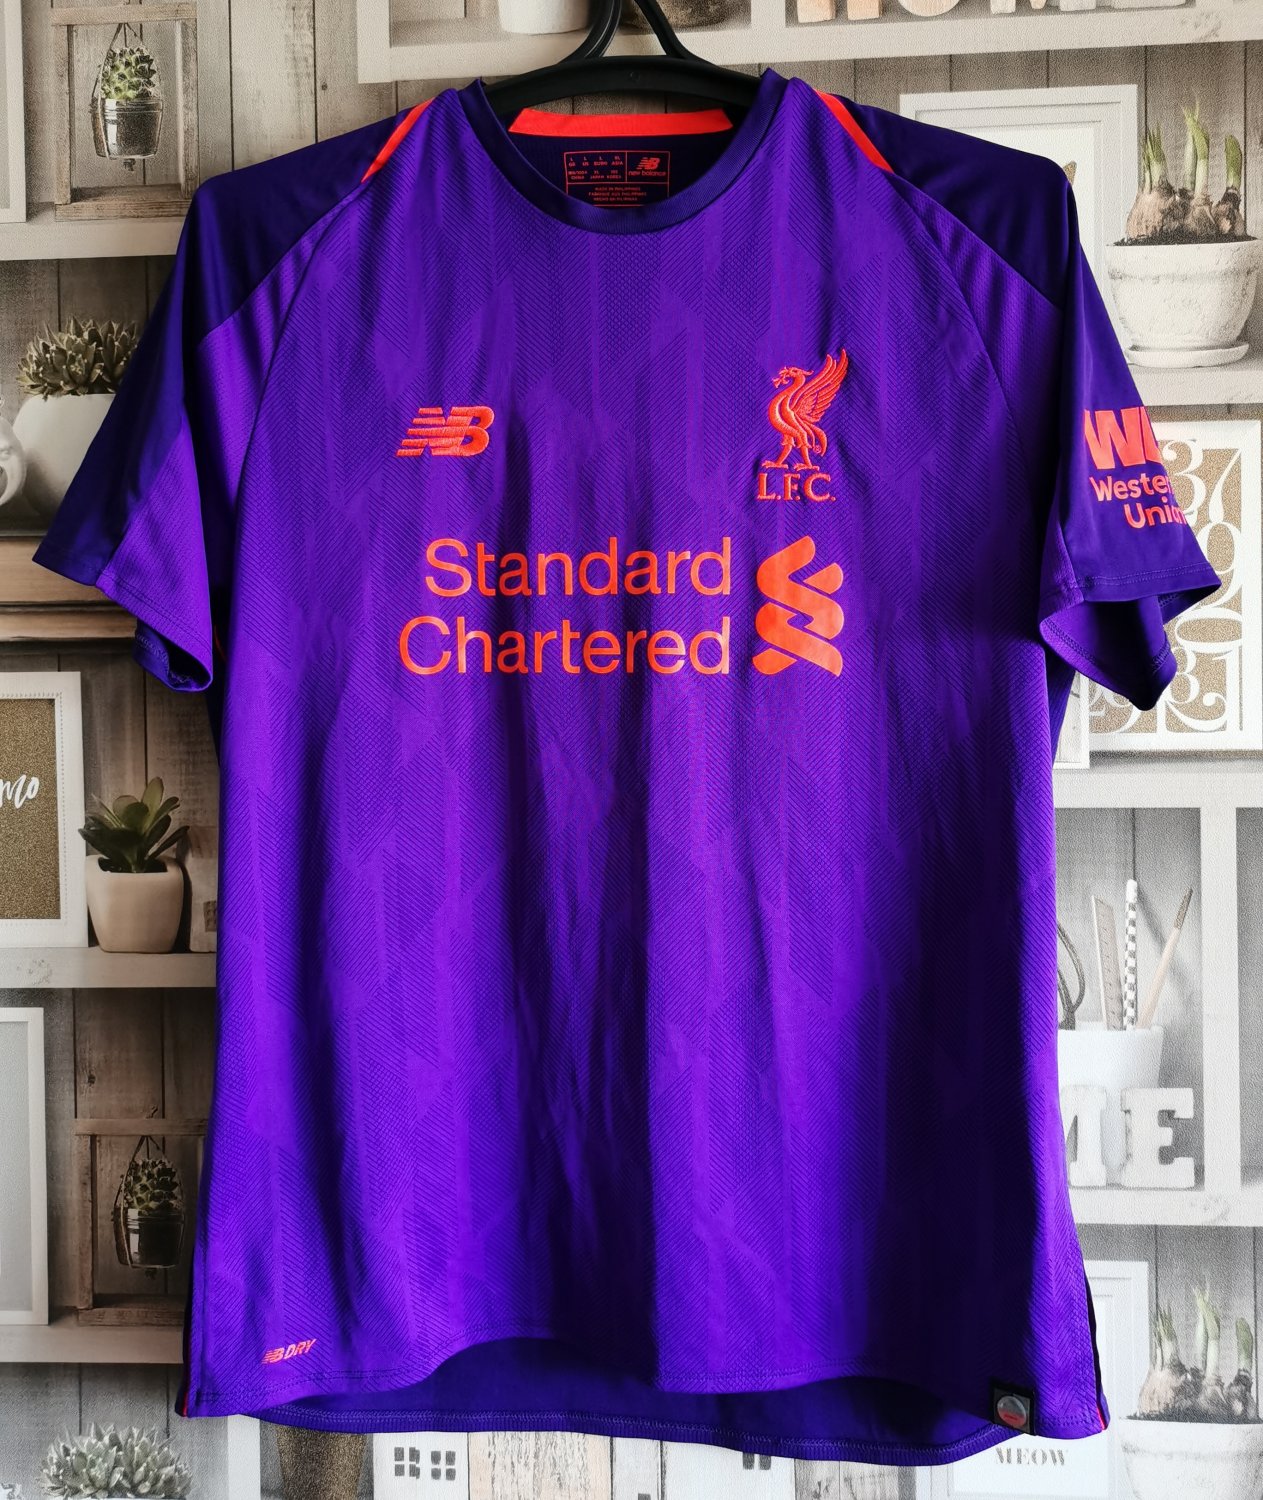 Liverpool Away football shirt 2018 - 2019. Sponsored by Standard Chartered